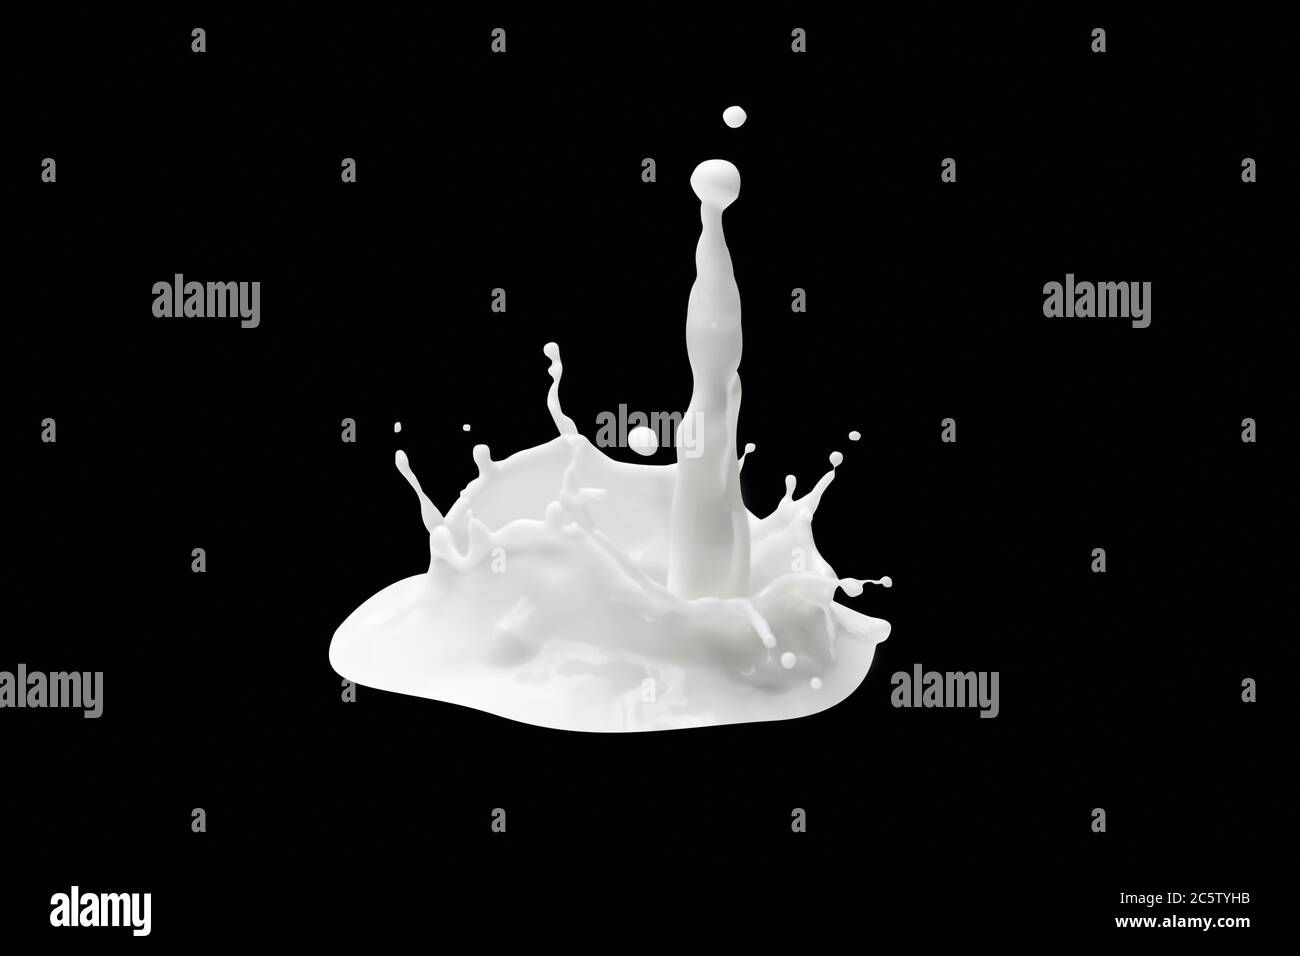 Milk Splash Or Milk On A Black Background In The Form Of Splashes Milk Pouring Splash Isolated